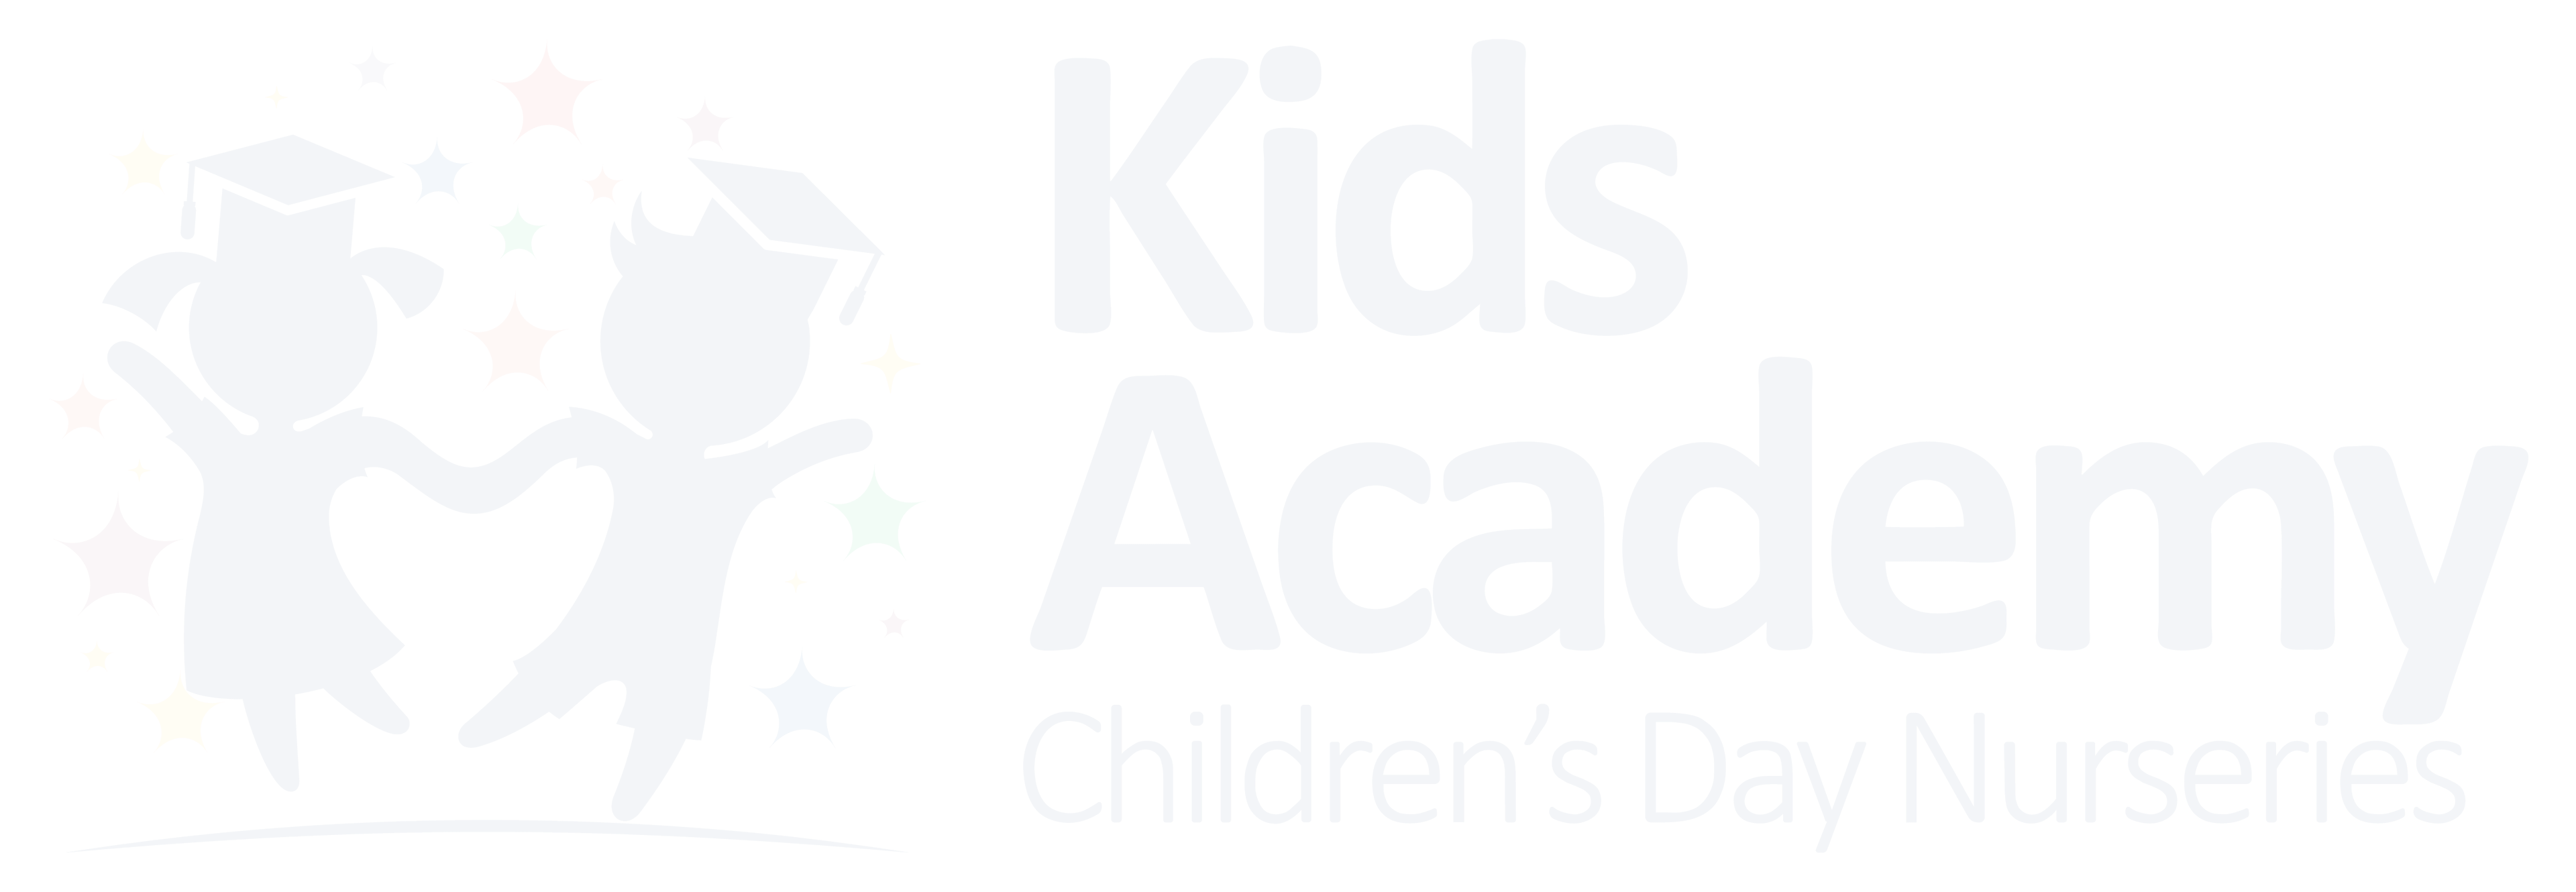 Kids Academy Nursery